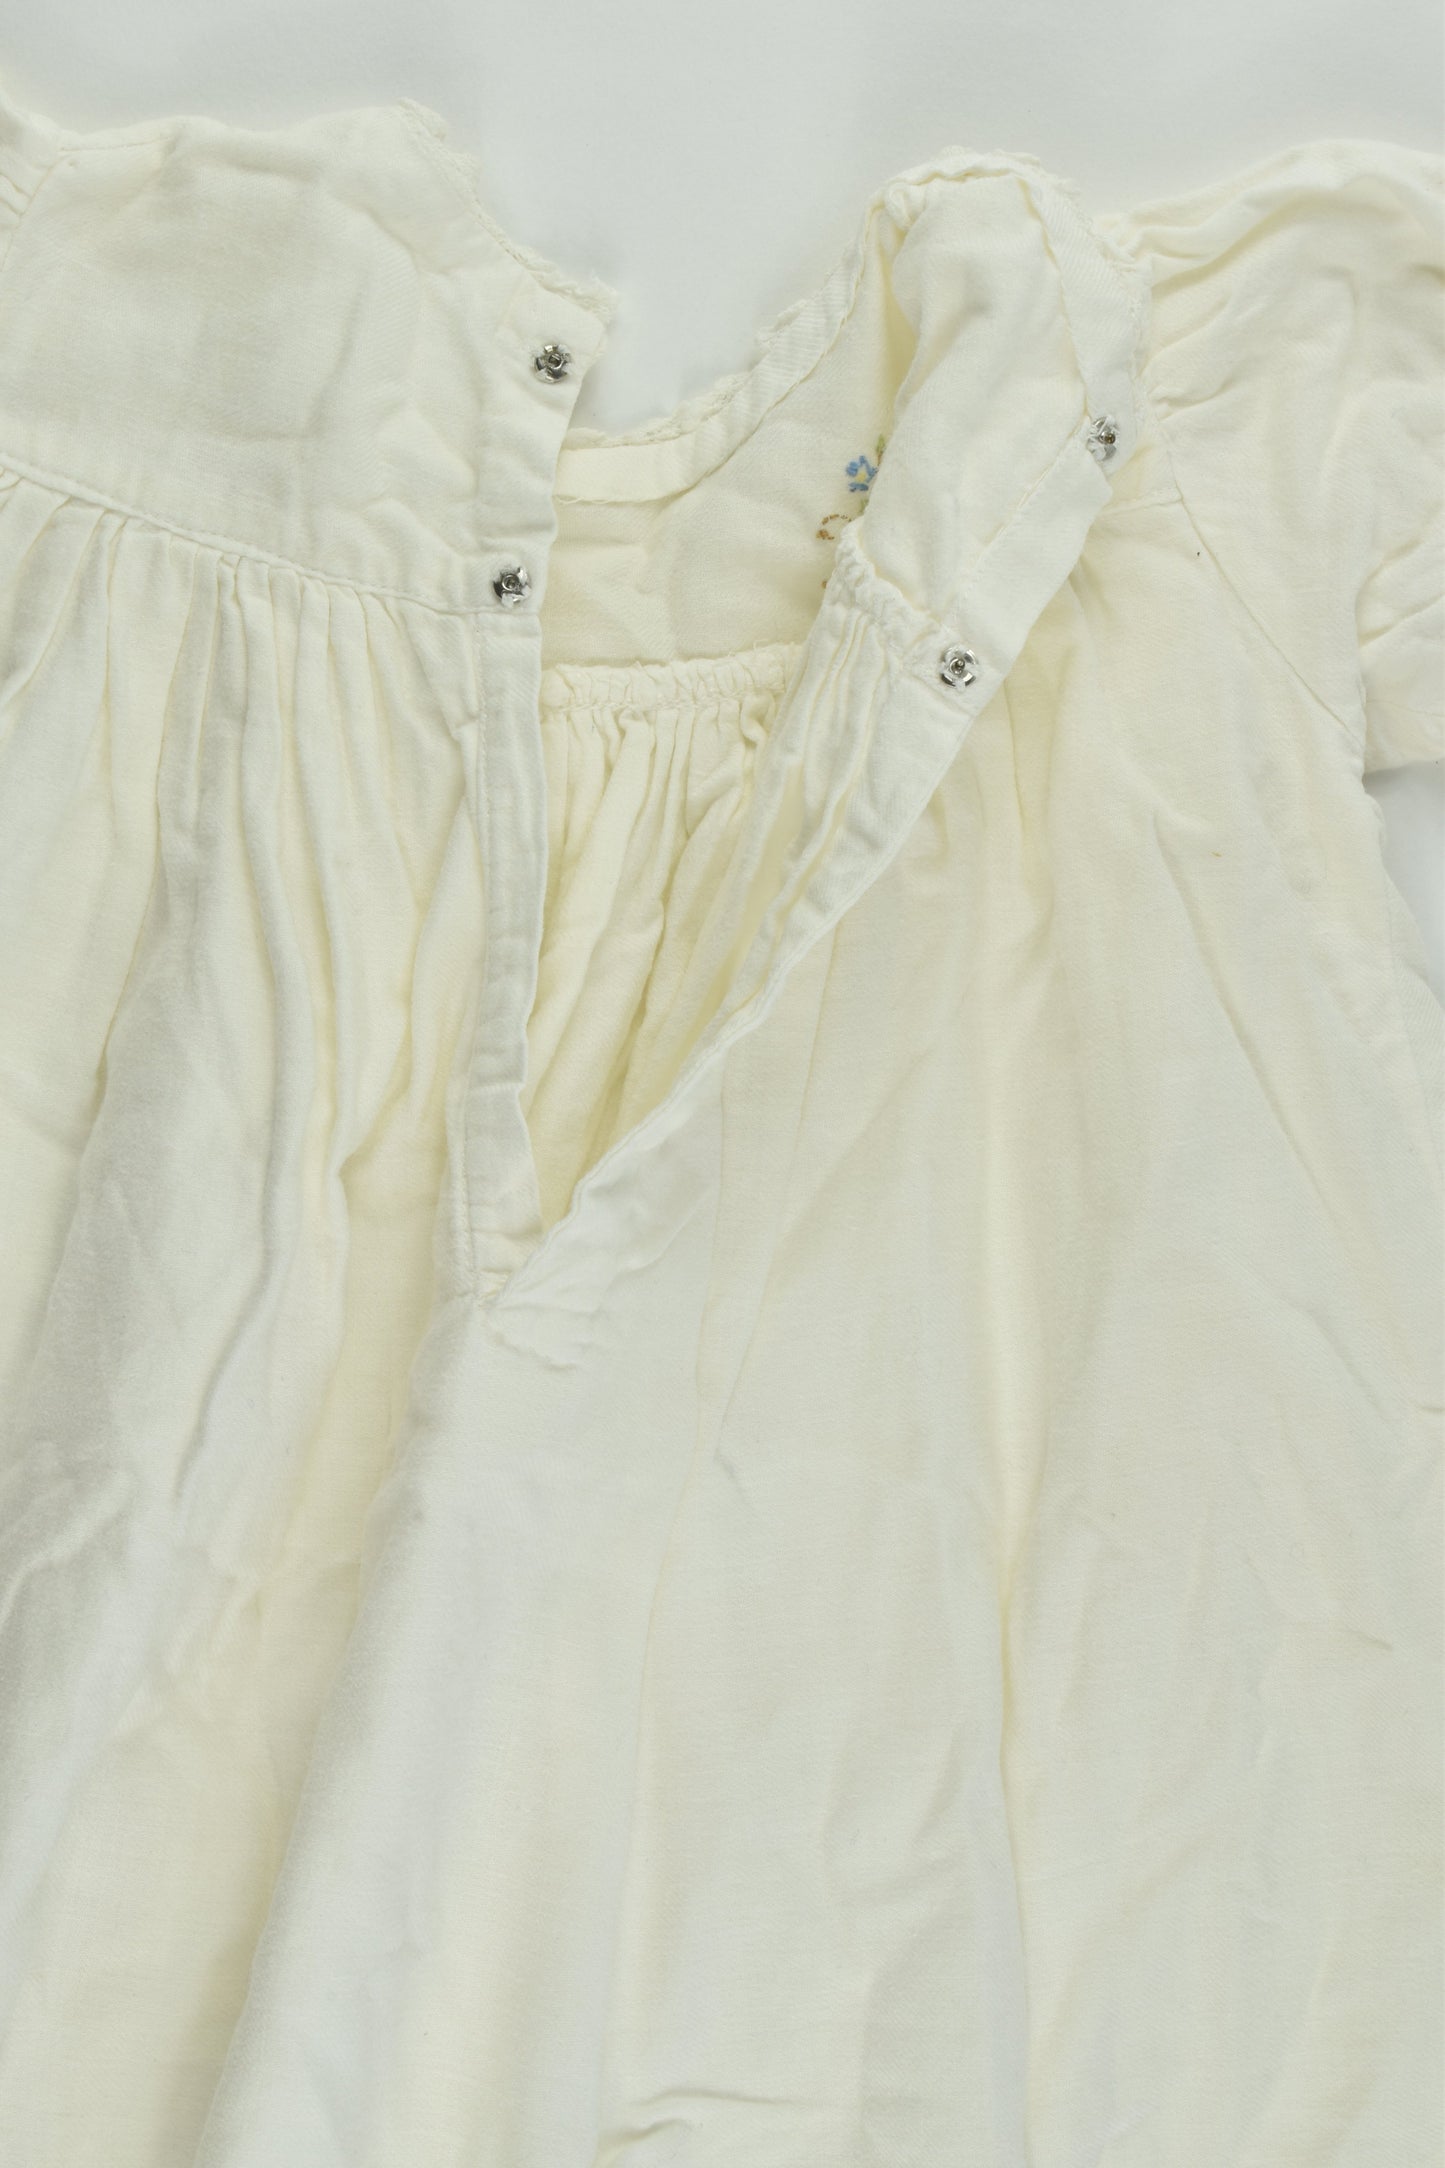 Handmade Size approx 00 Vintage Dress